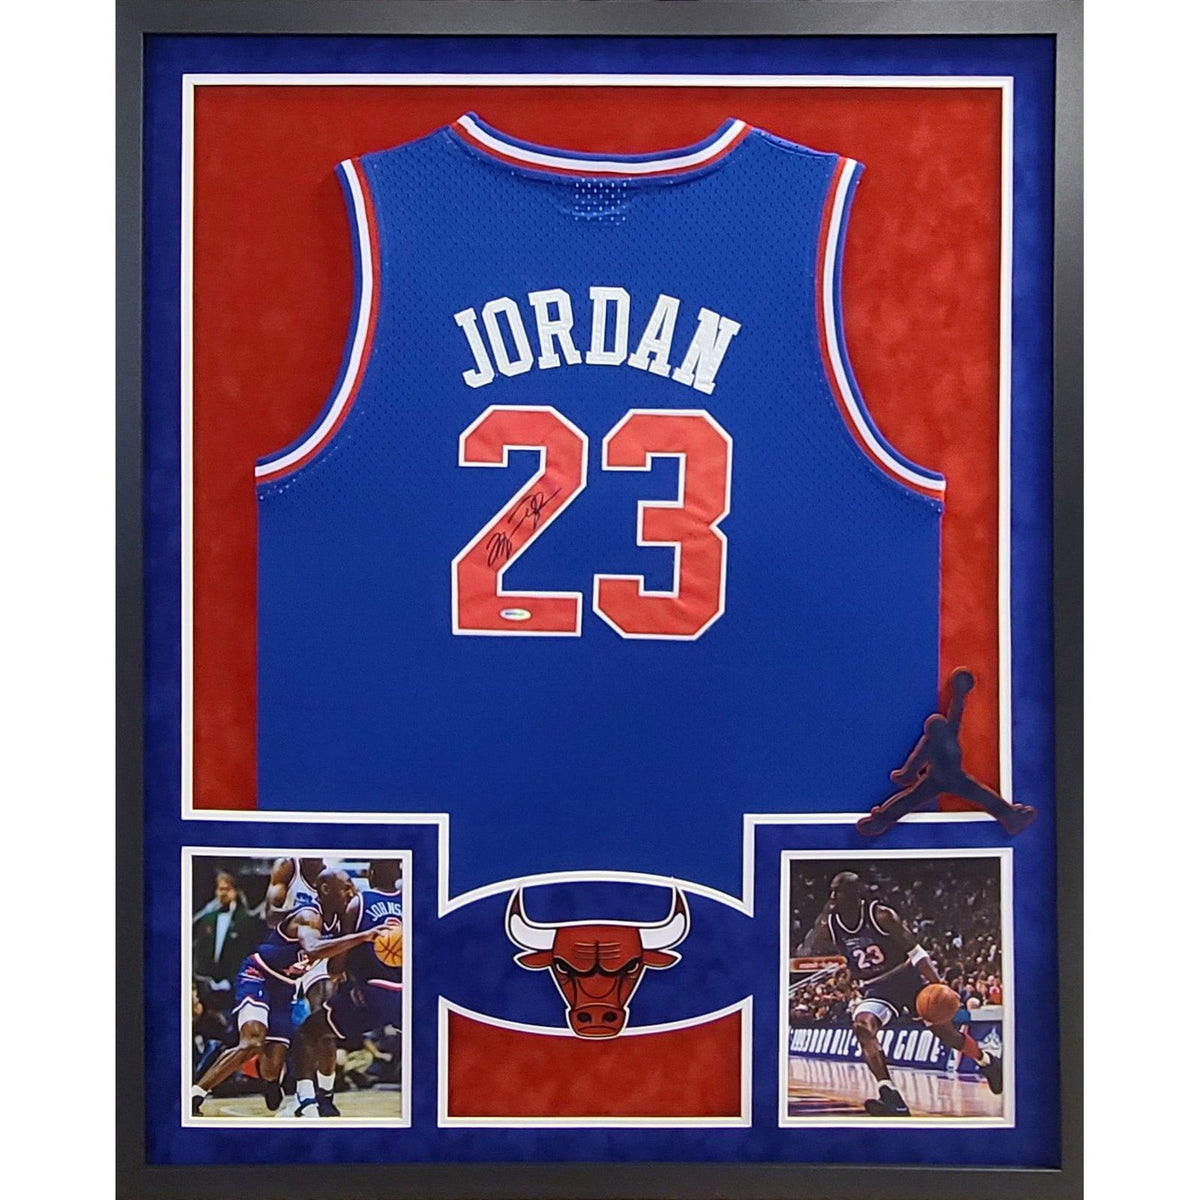 Michael Jordan Autographed Framed North Carolina Jersey - The Stadium Studio